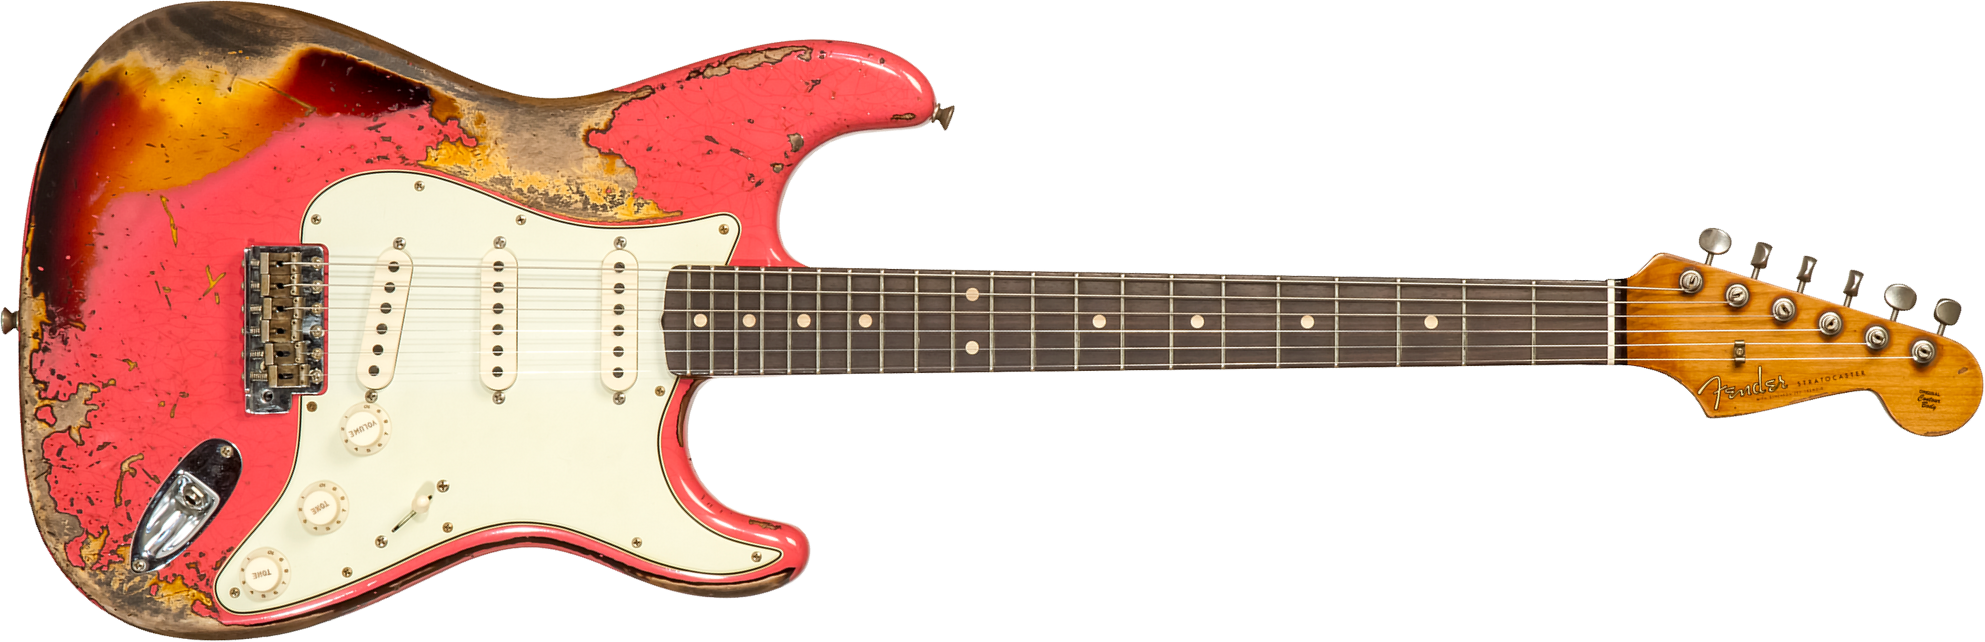 Fender Custom Shop Strat 1960/63 3s Trem Rw #cz566764 - Super Heavy Relic Fiesta Red Ov. 3-color Sunburst - E-Gitarre in Str-Form - Main picture